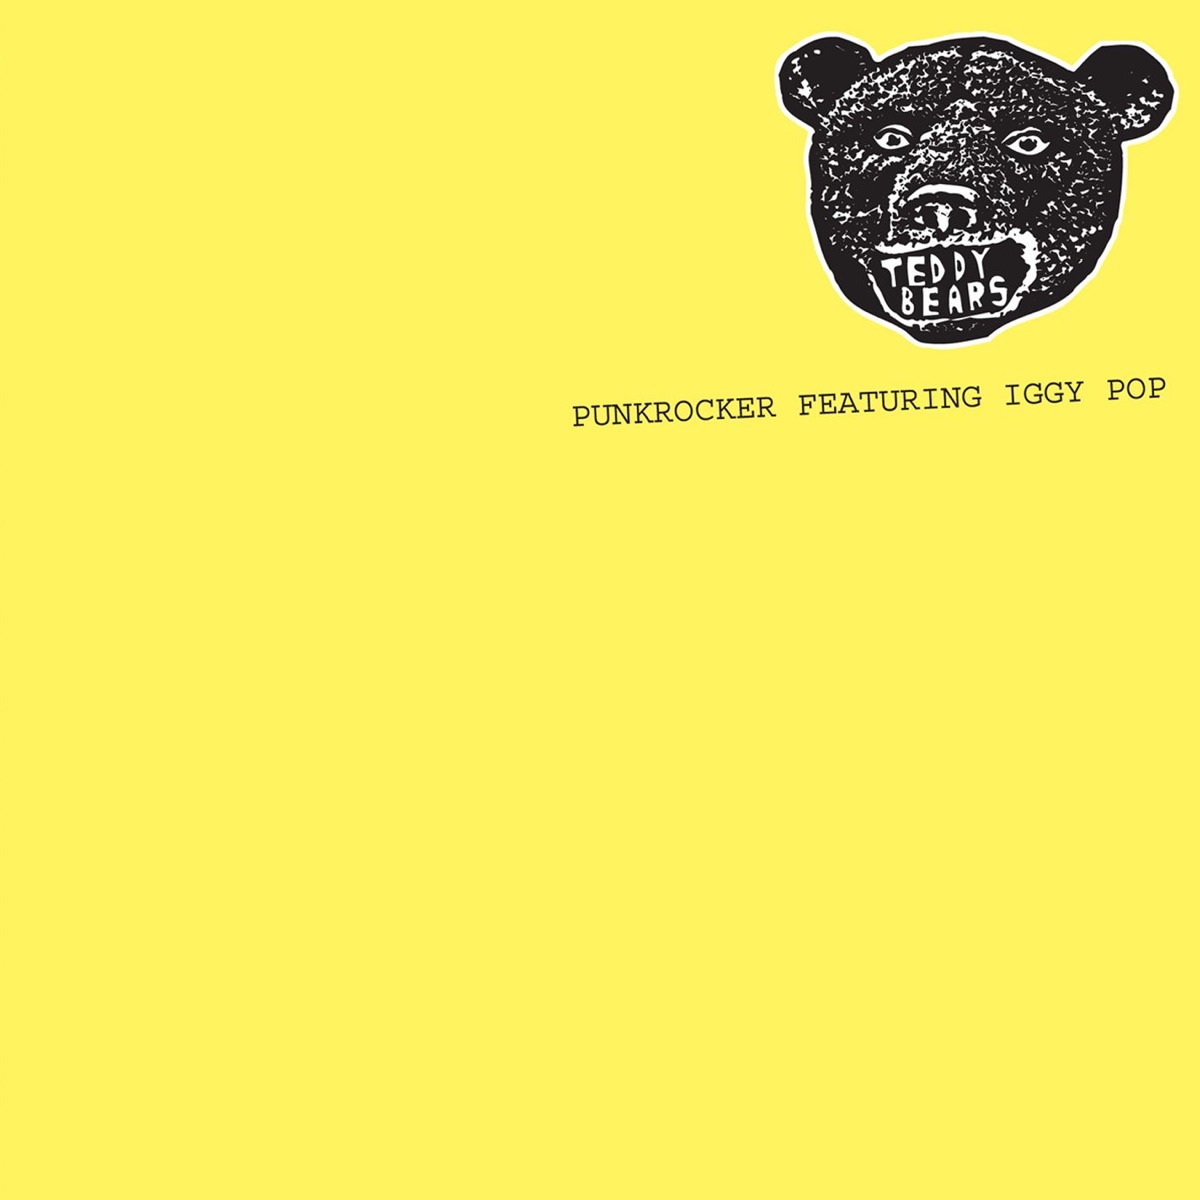 Punkrocker - EP - Album by Teddybears featuring Iggy Pop - Apple Music